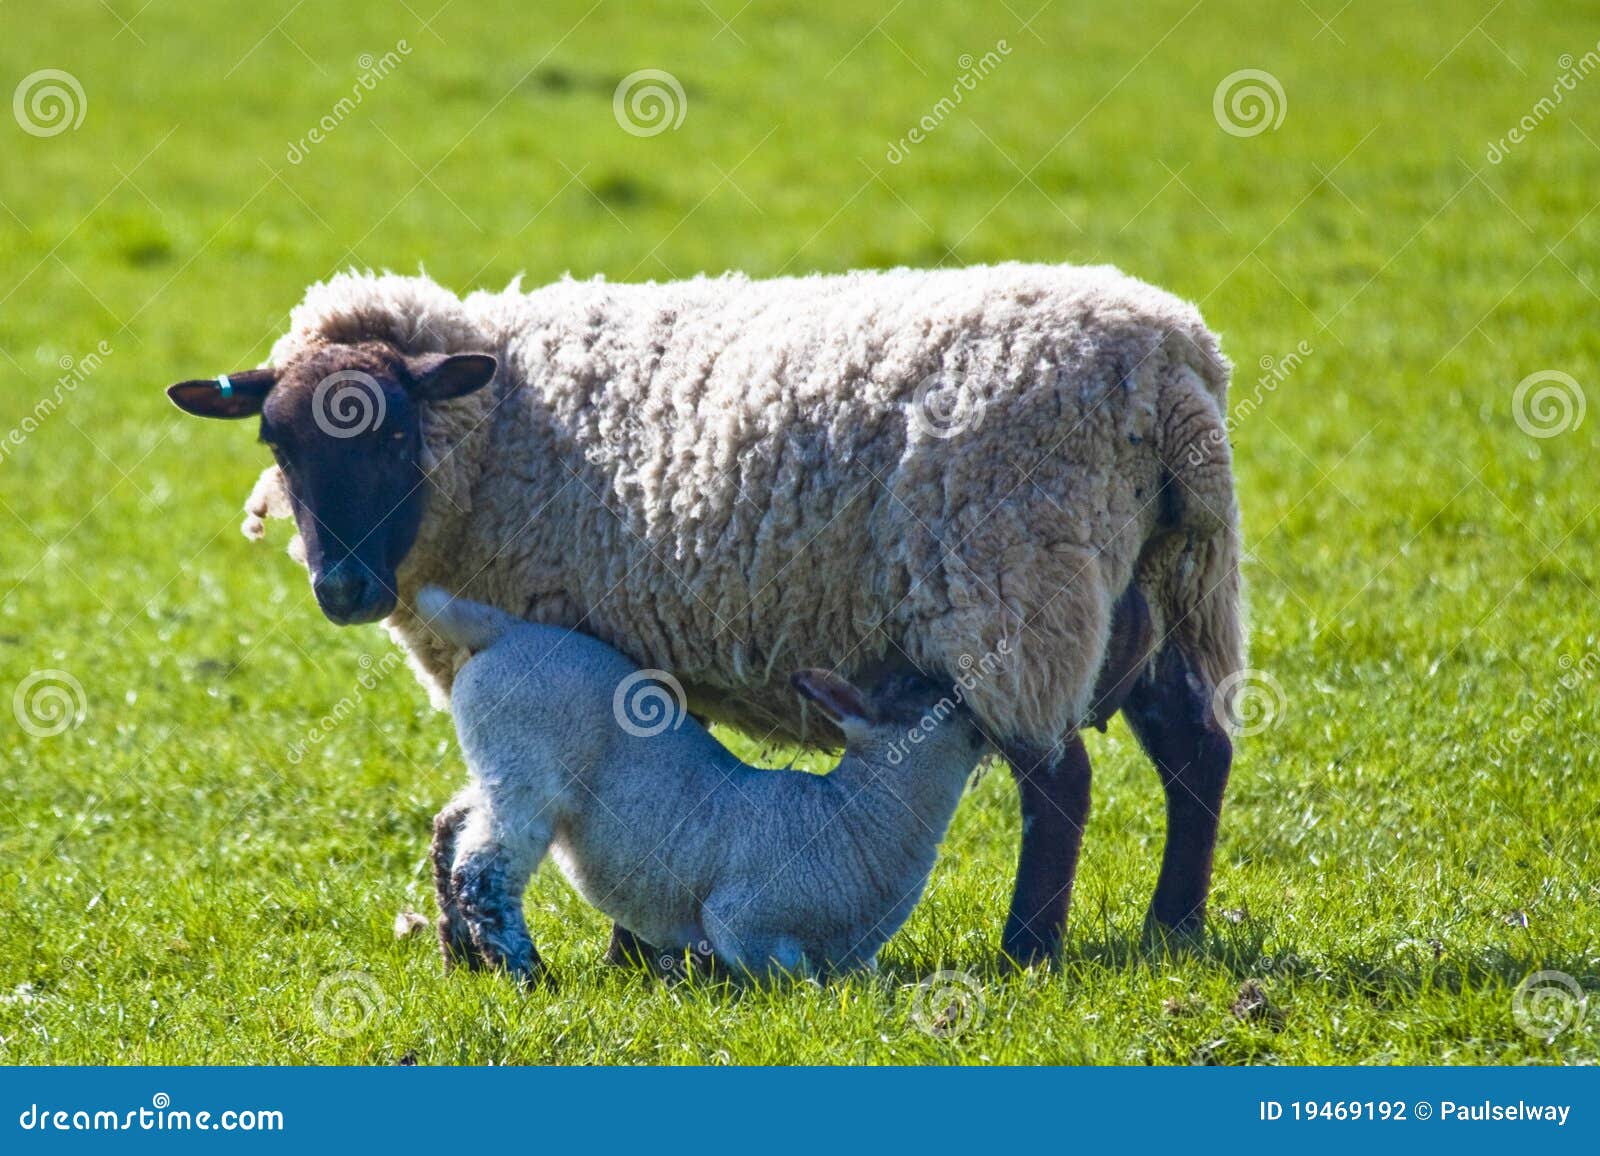 ewe feeding lamb